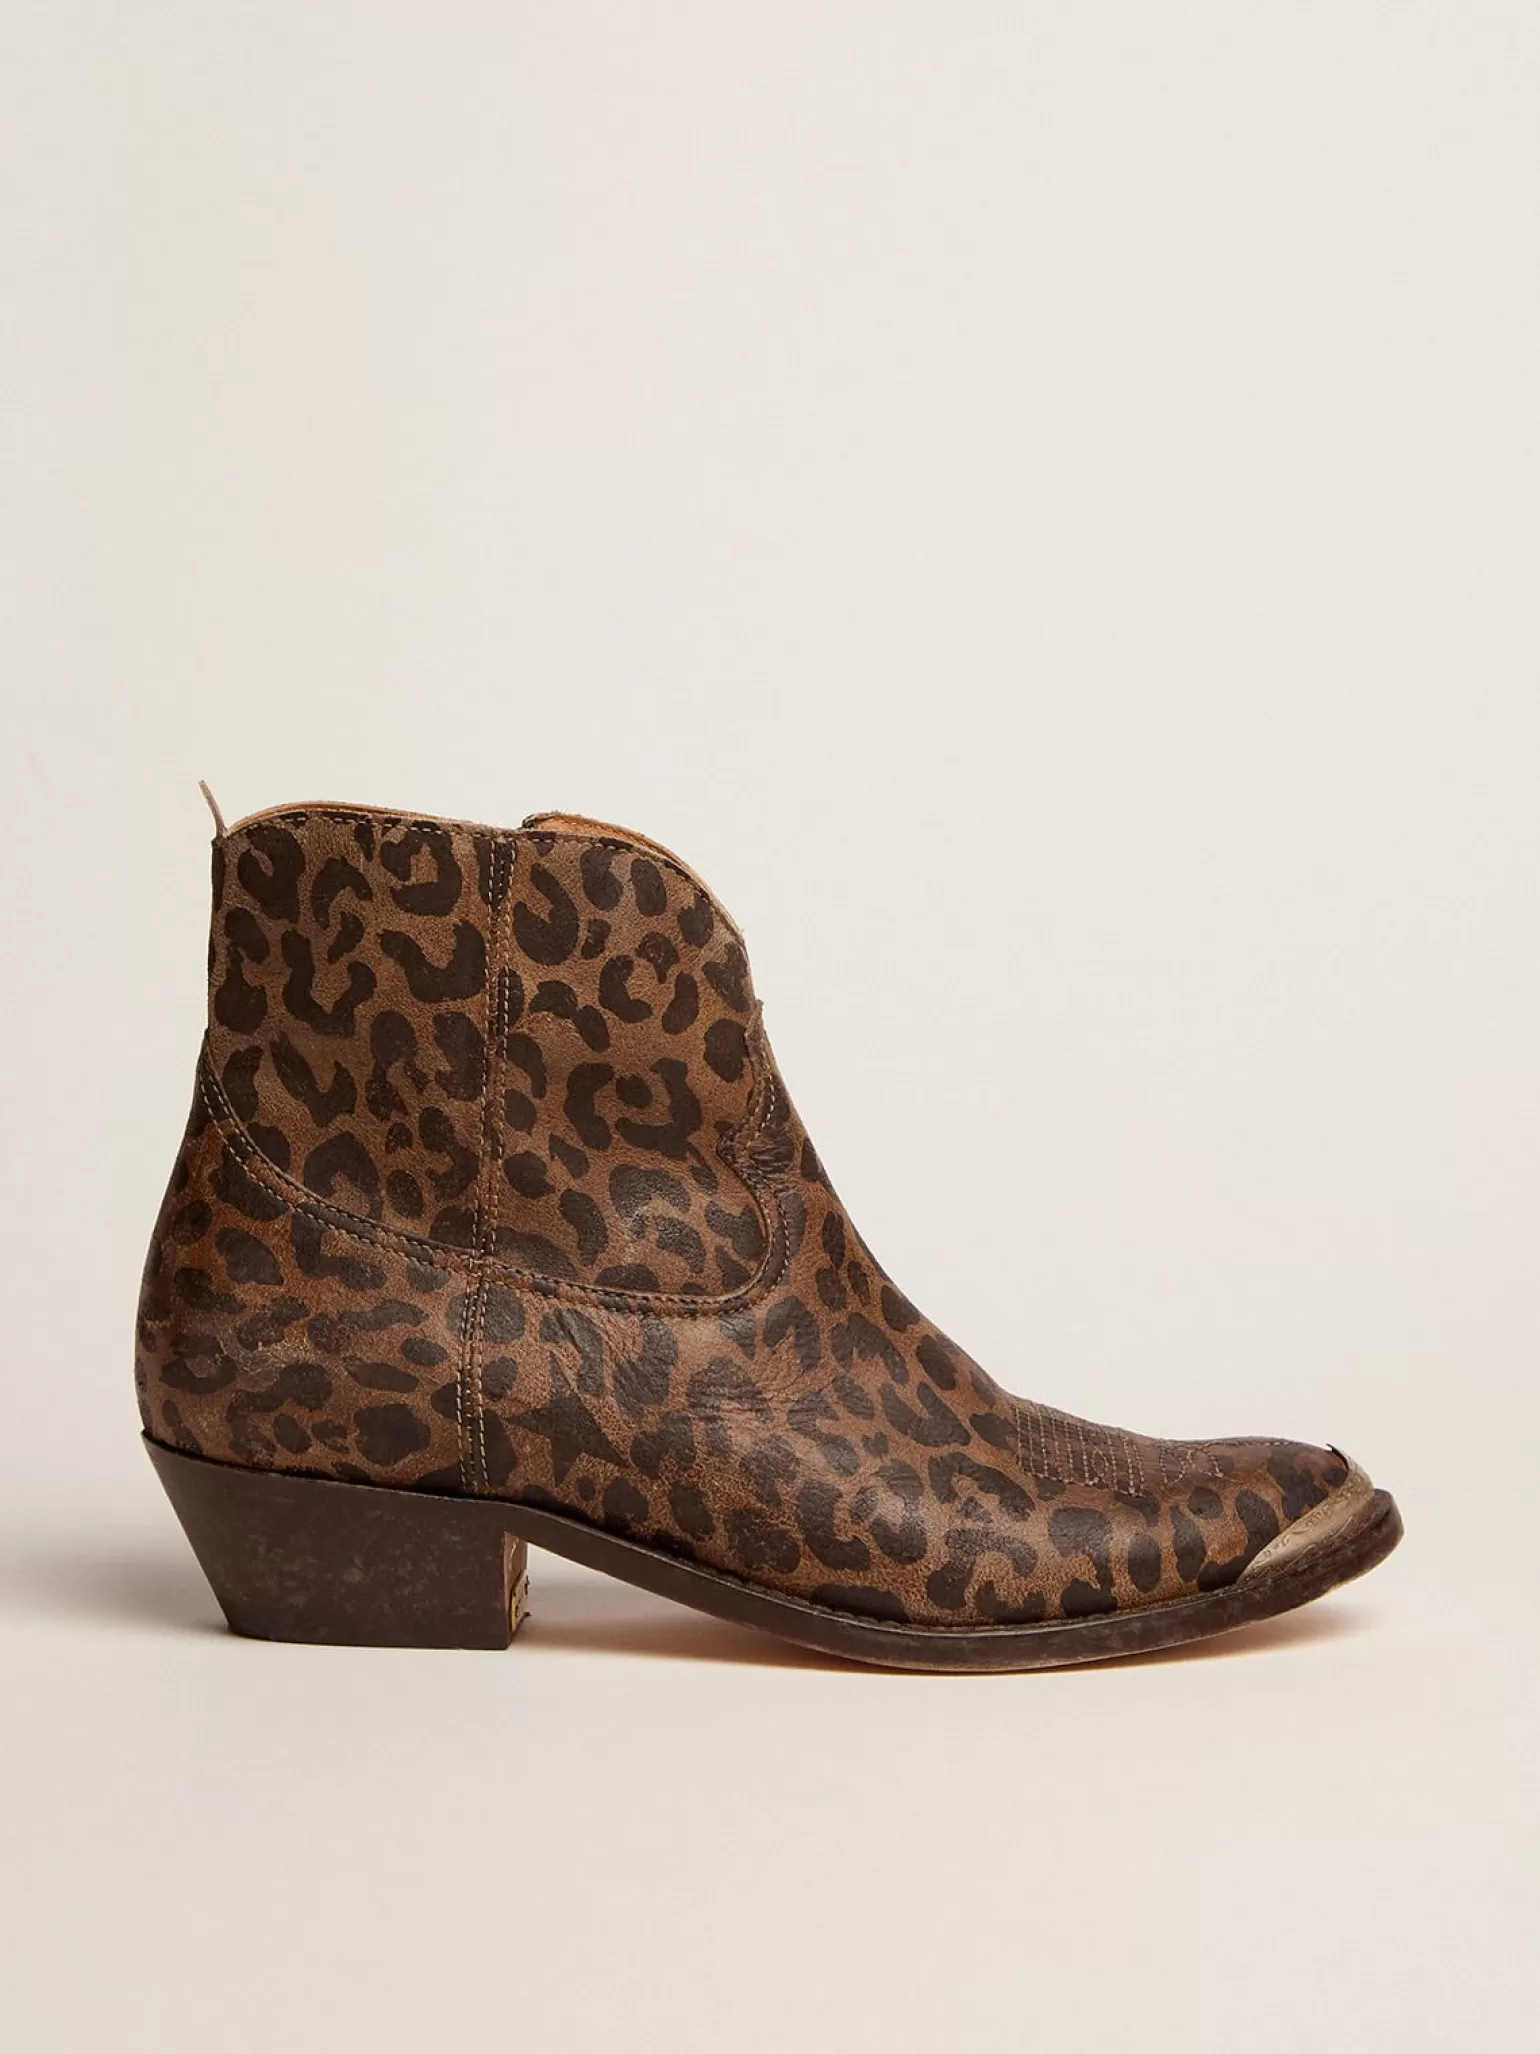 Best Ankle boot feminina de couro com estampa de leopardo MULHER Botas